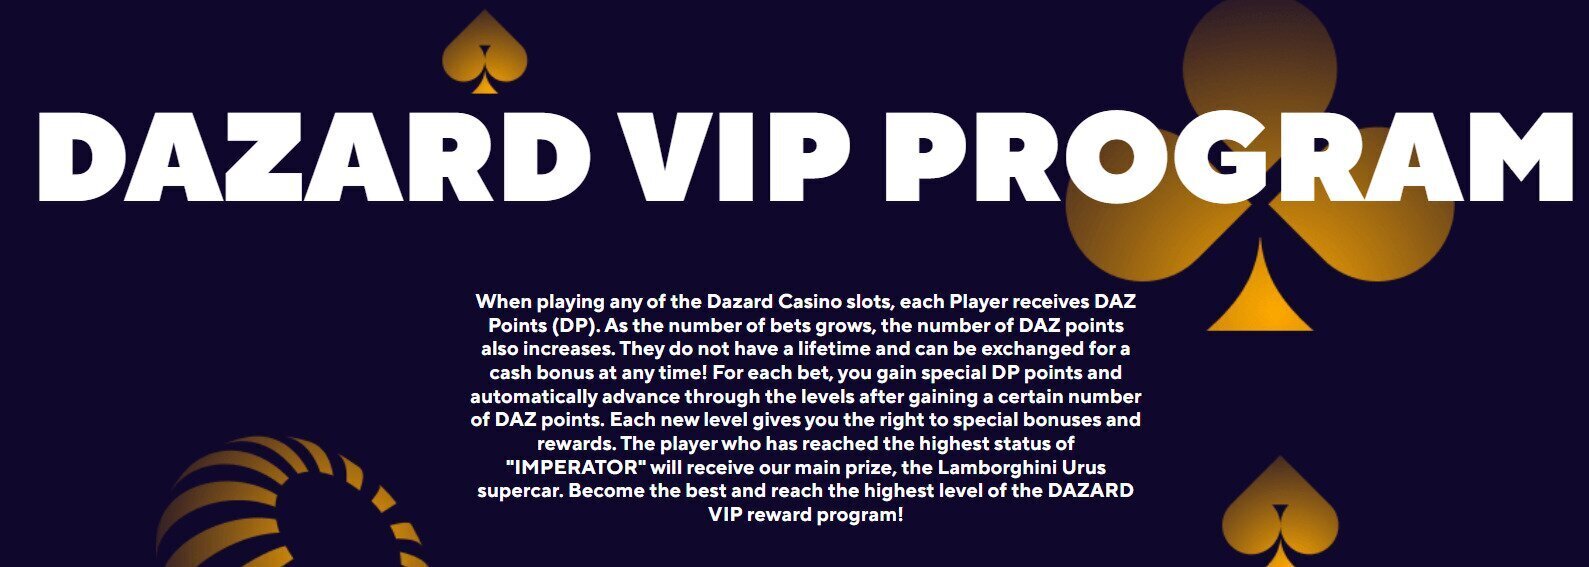 Dazard Casino VIP Program